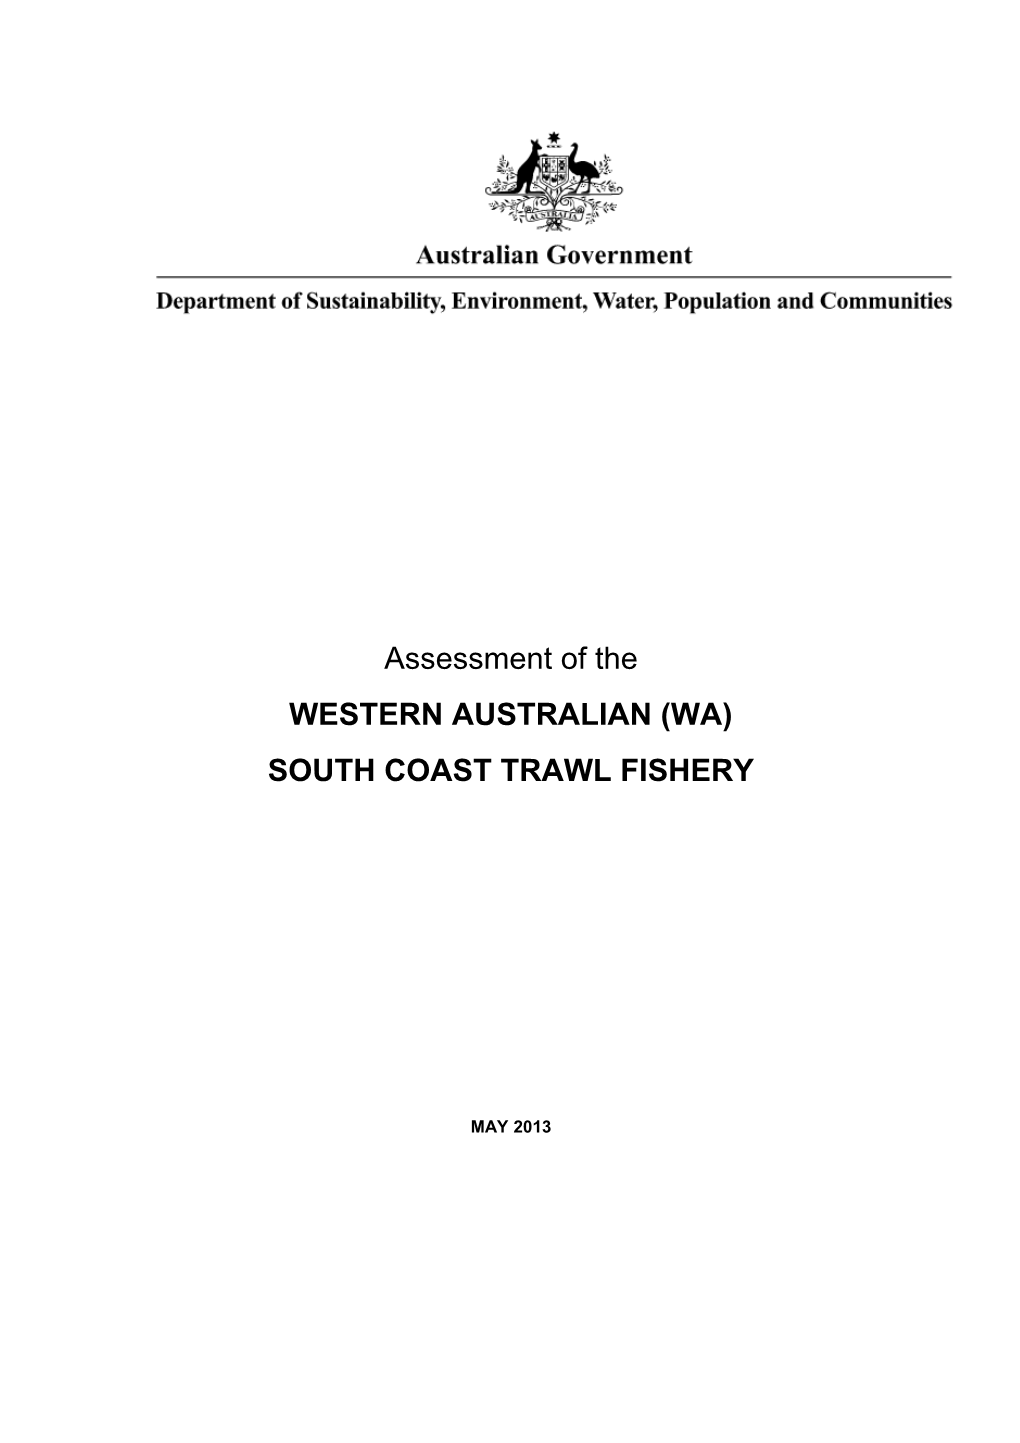 Assessment of the Western Australian (WA) South Coast Trawl Fishery